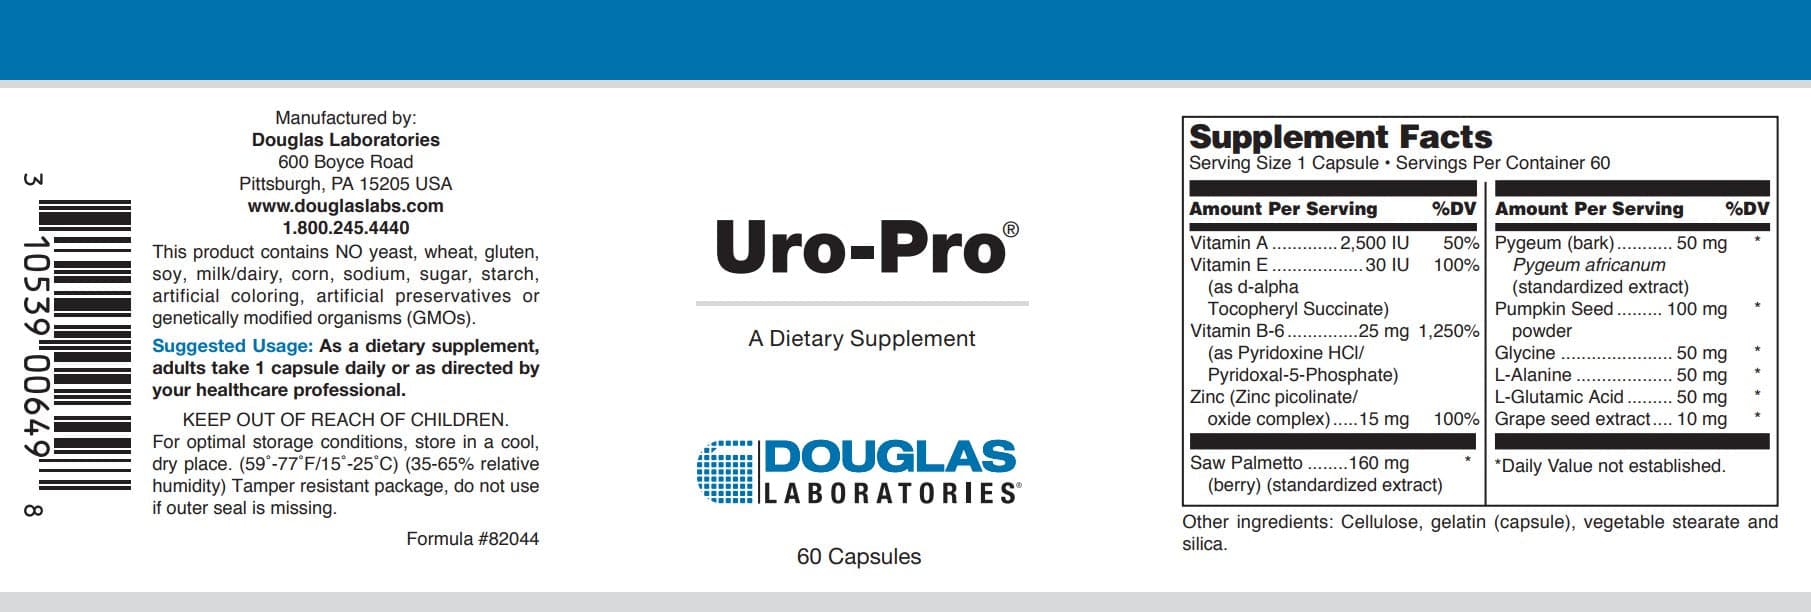 Douglas Laboratories Uro-Pro